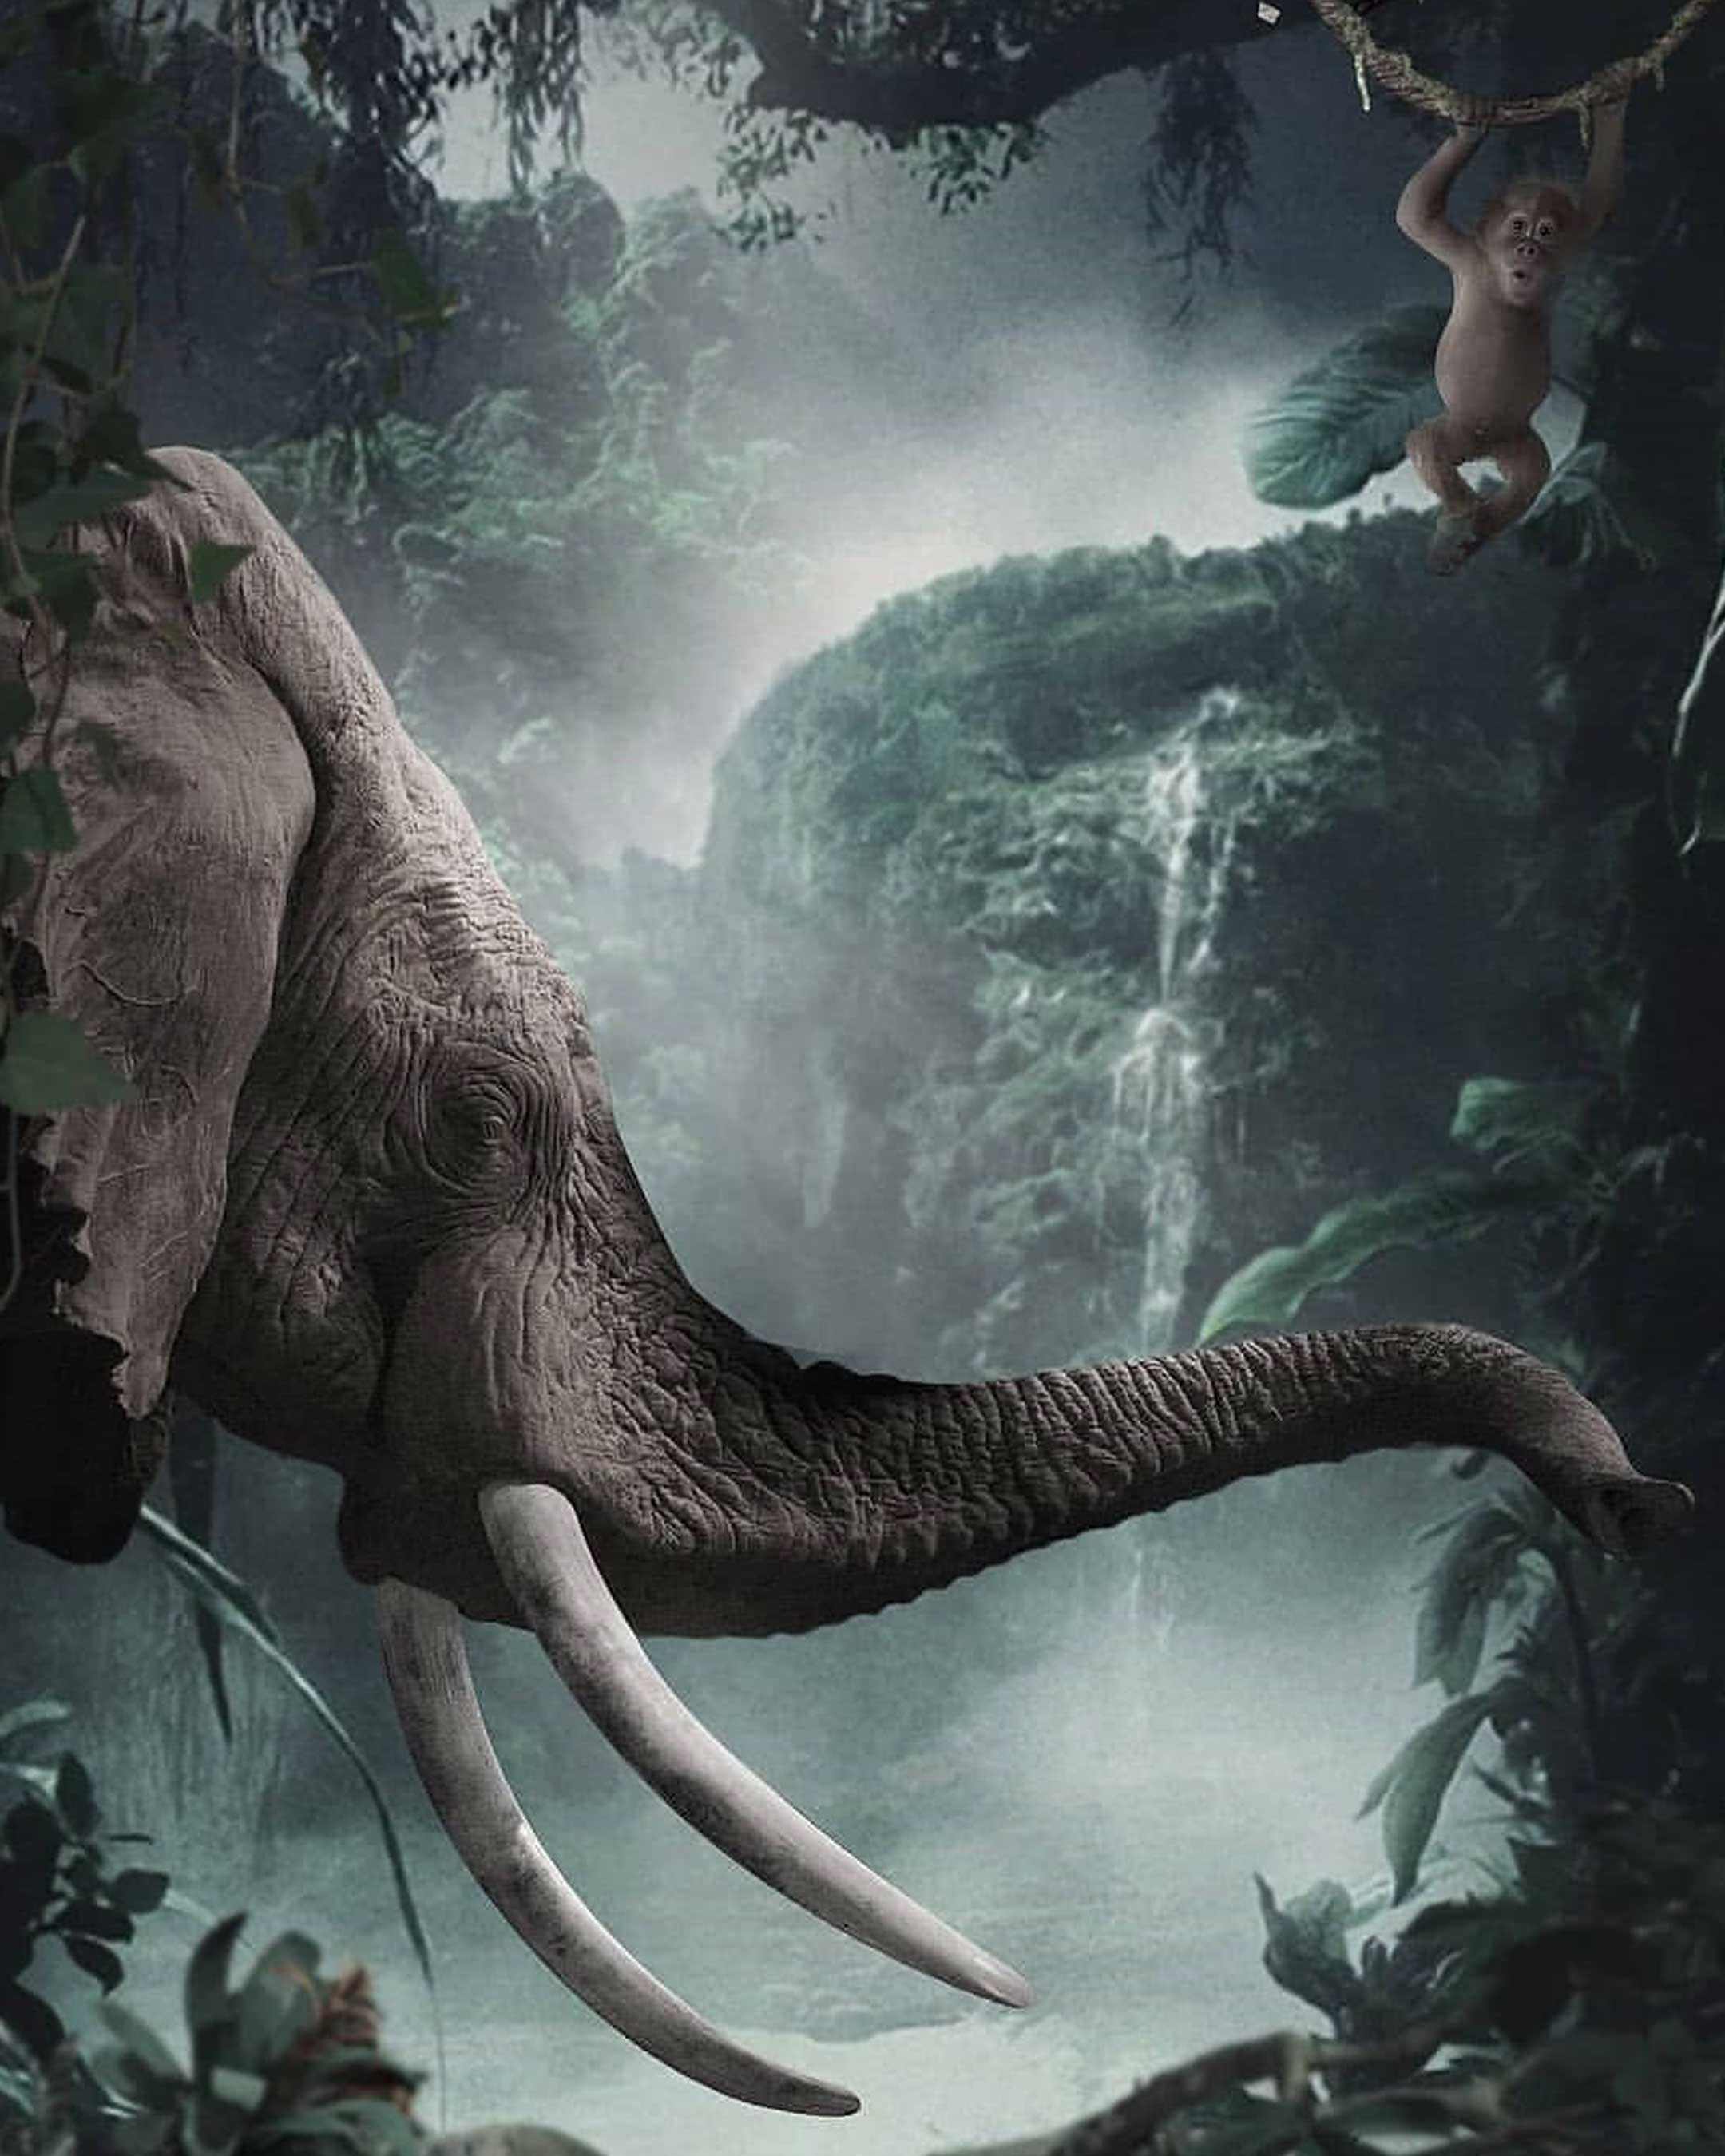 Jungle Book PicsArt Background Free Stock Image [ Download ]